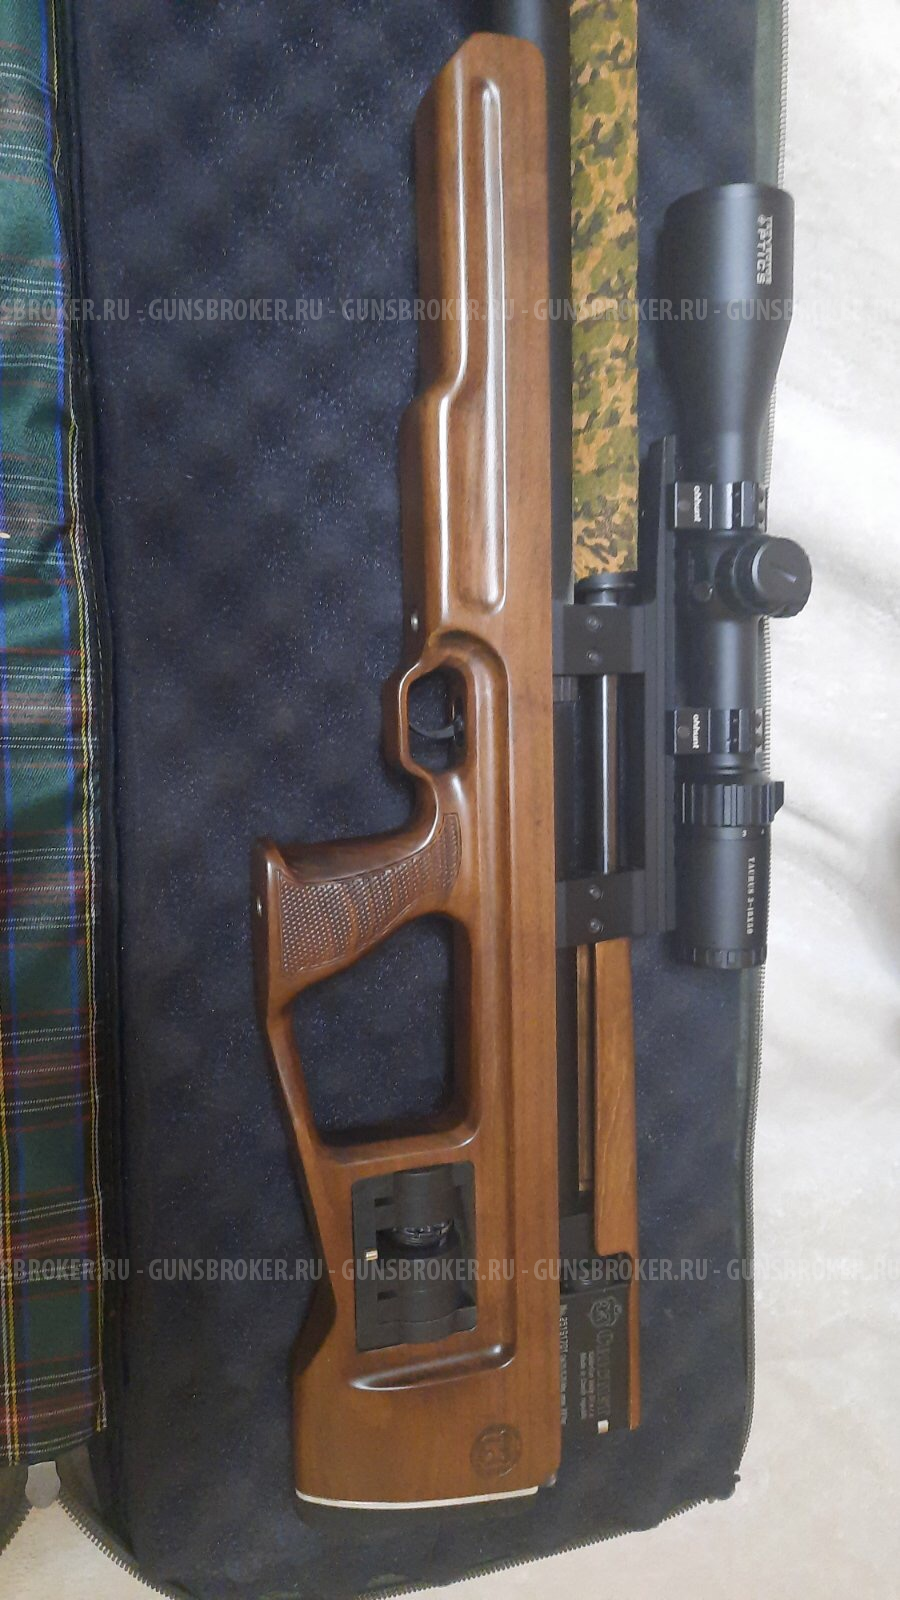 PSP винтовка крикет 6.35